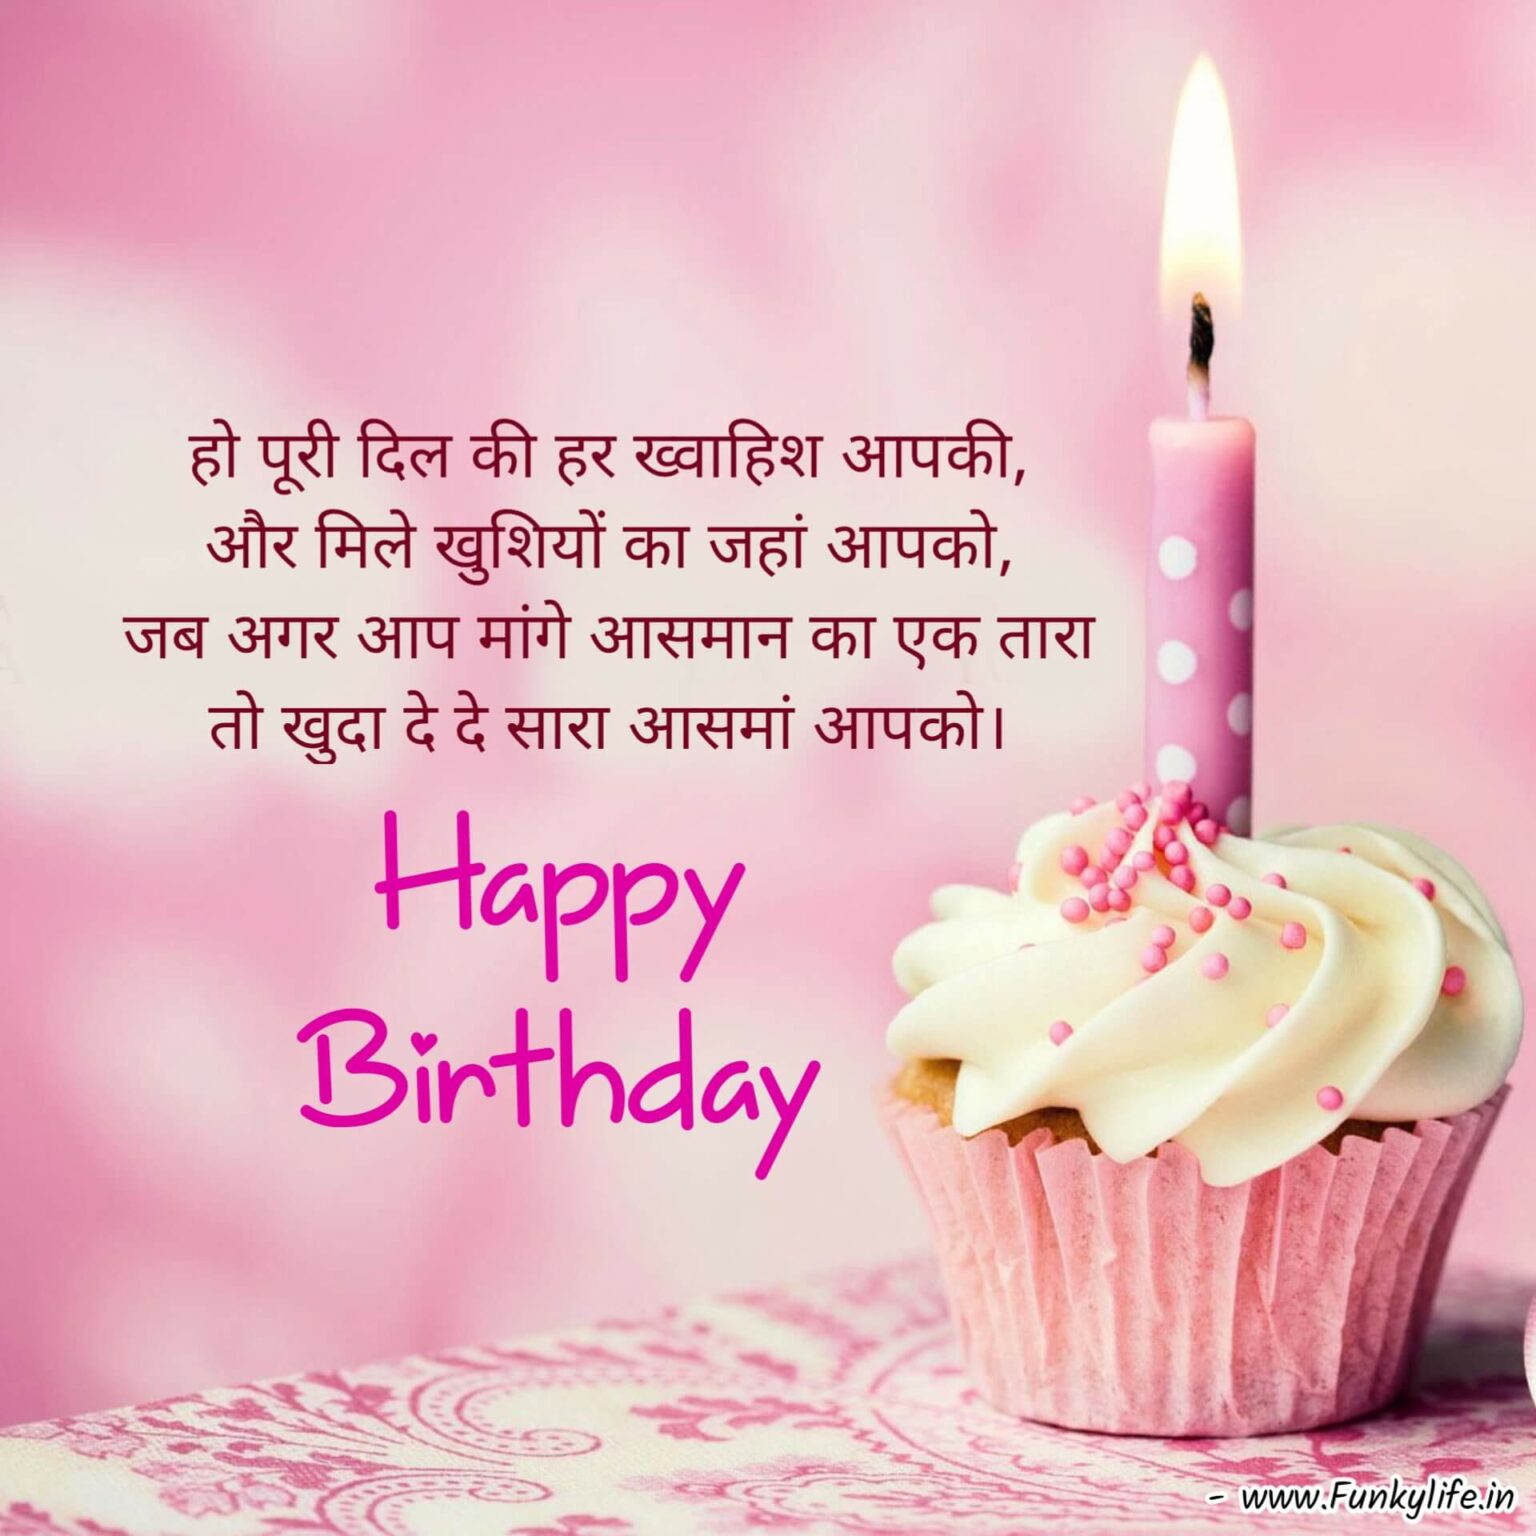 Birthday Wishes In Hindi 2 1536x1536